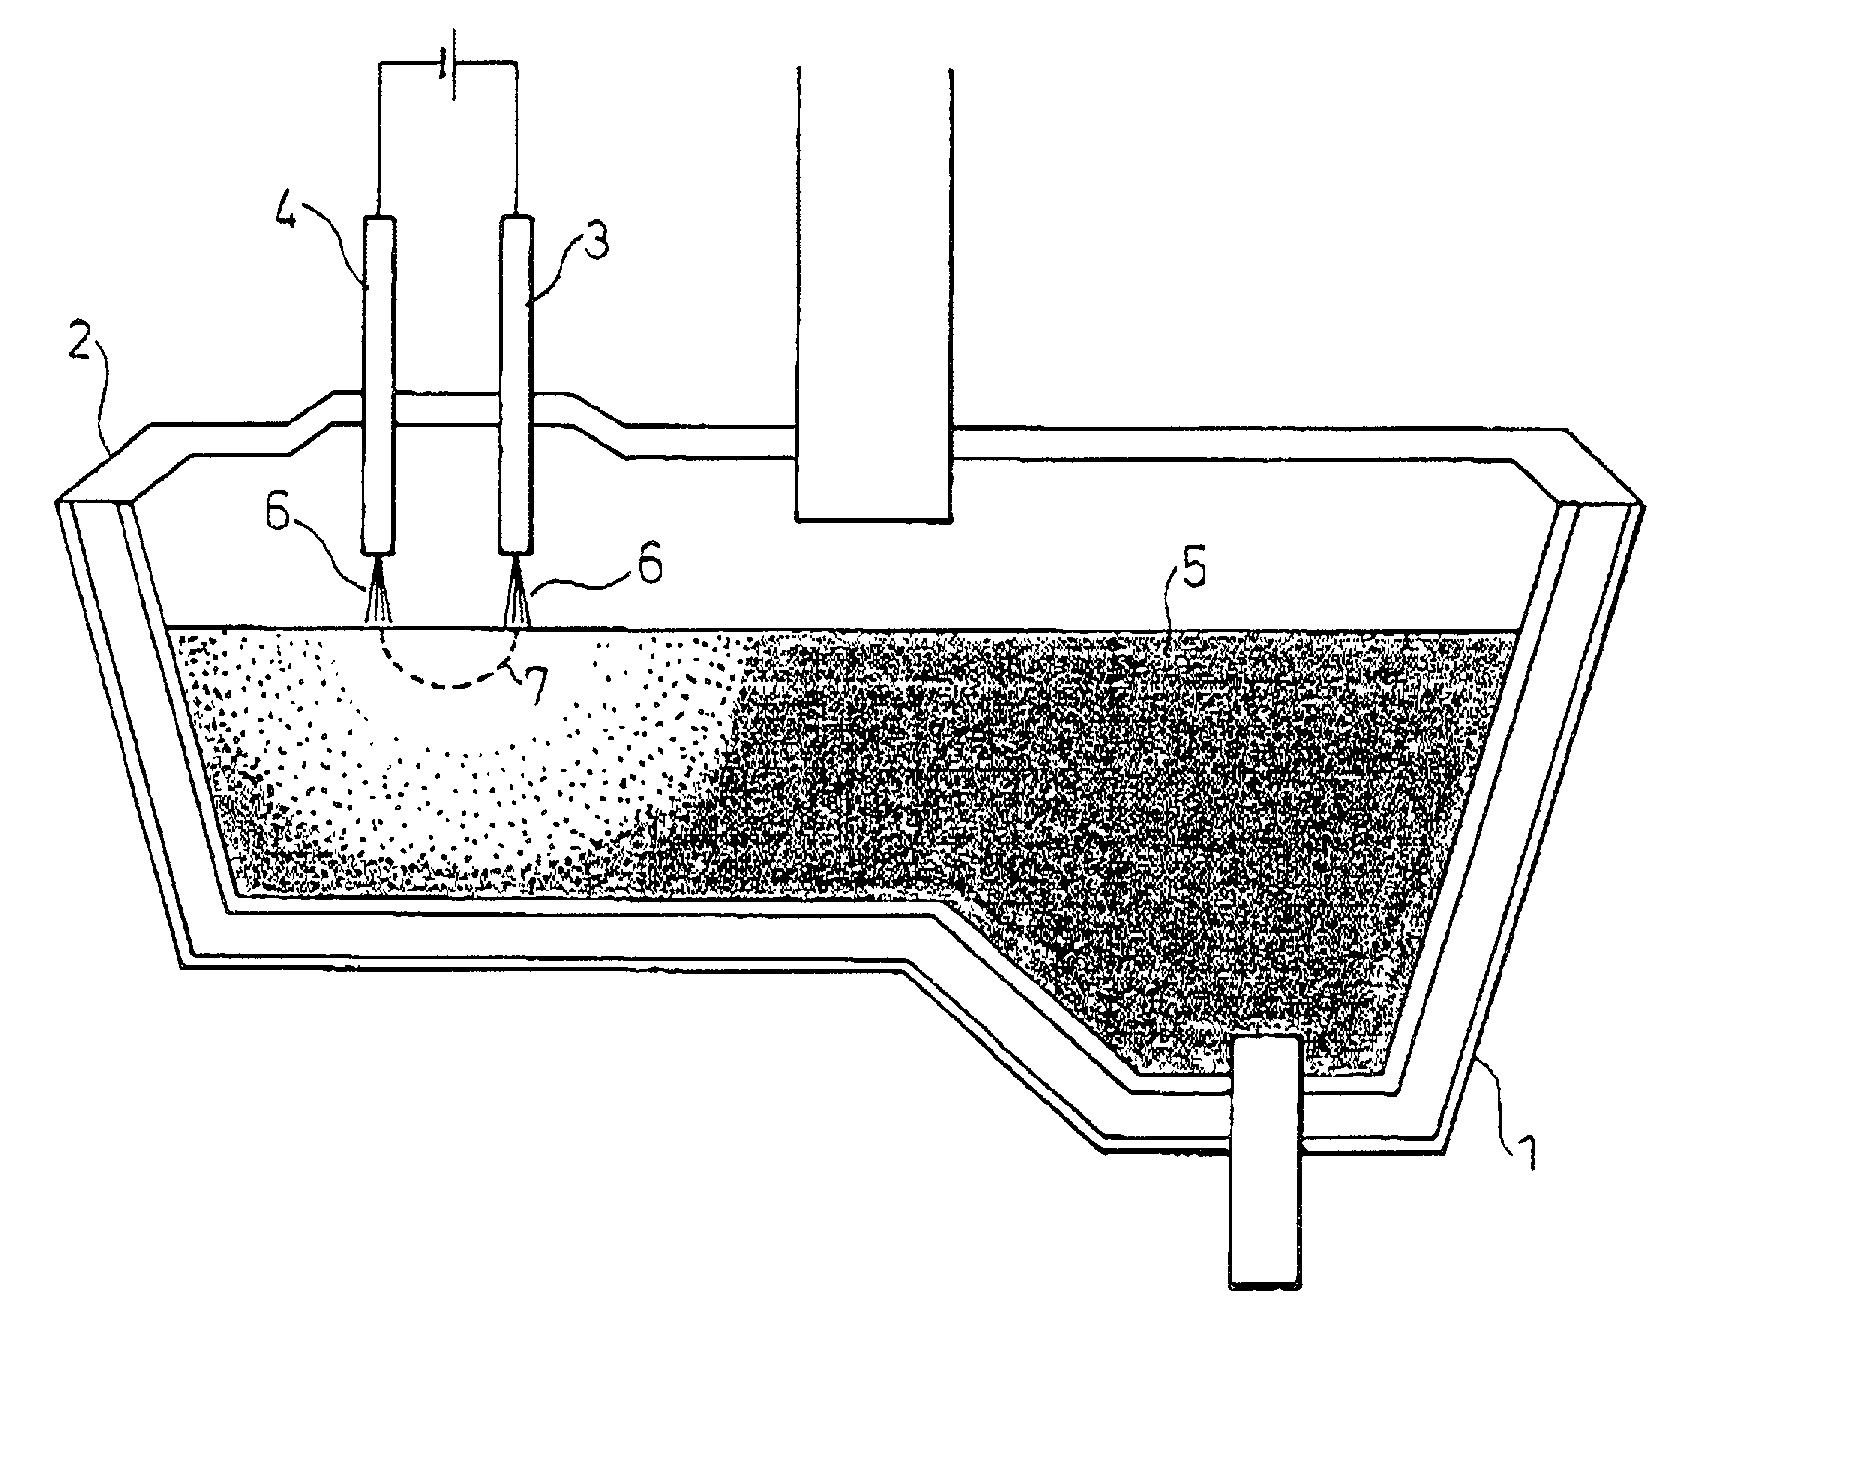 Transfer-type plasma heating anode